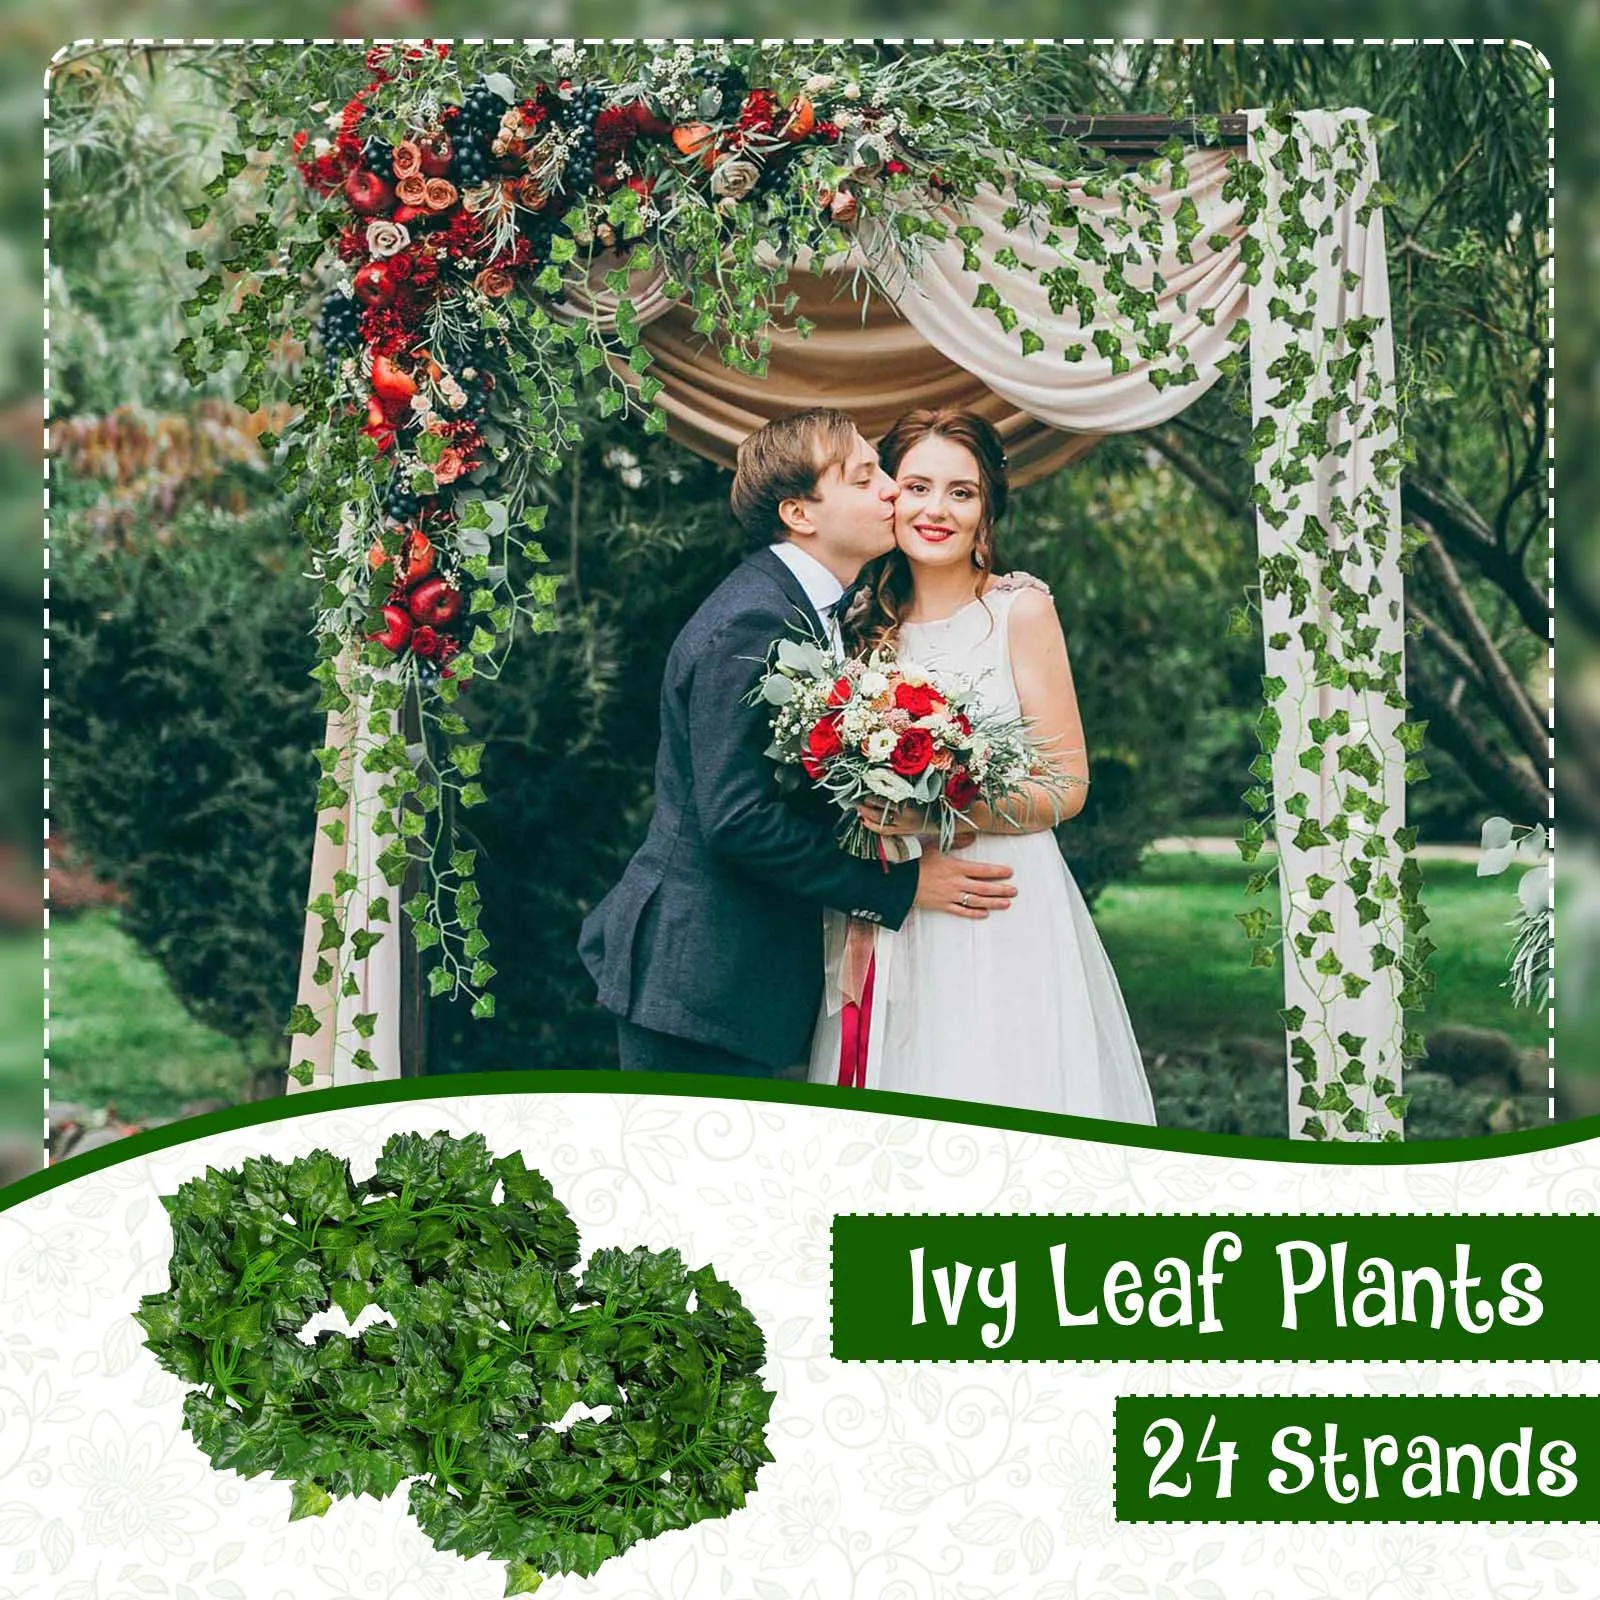 

24 Strands 86 FT Artificial Lvy Leaf Vine Garland Fake Foliage Hanging Plants Plant Silk Leaf Vines For Wedding Birthday Party